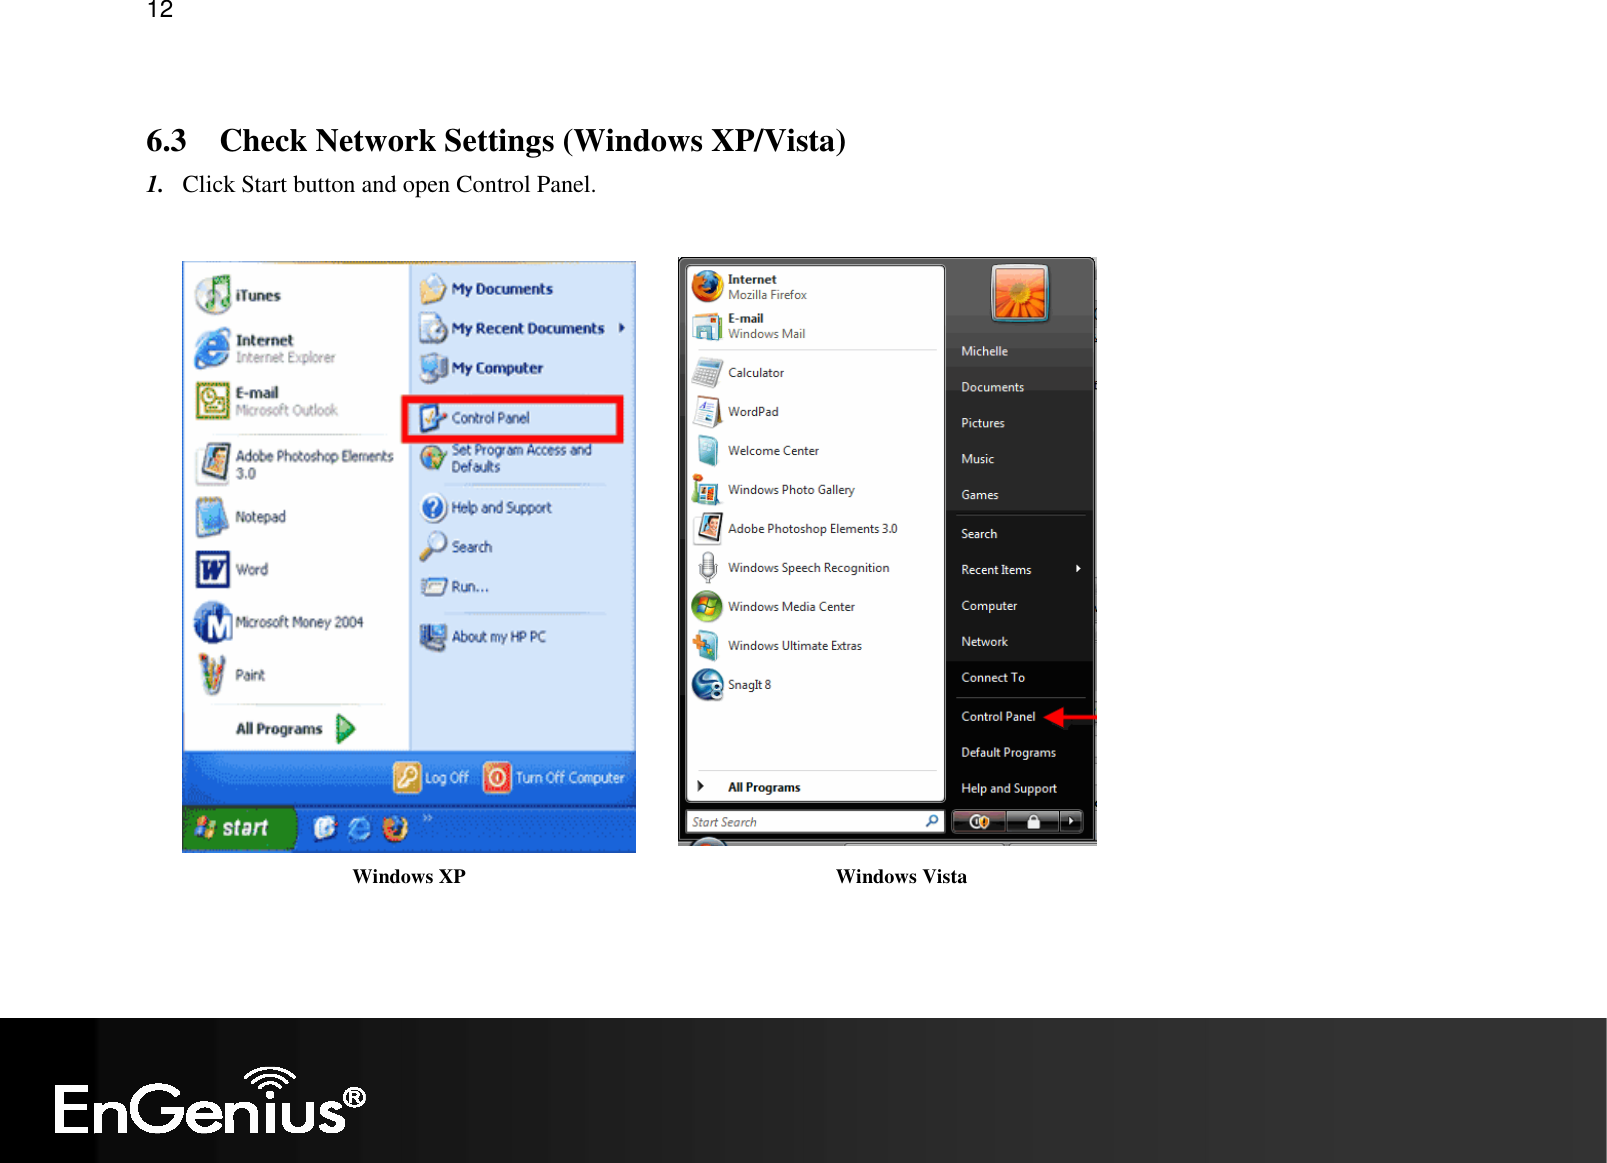   12  6.3 Check Network Settings (Windows XP/Vista) 1. Click Start button and open Control Panel.  Windows XP Windows Vista 